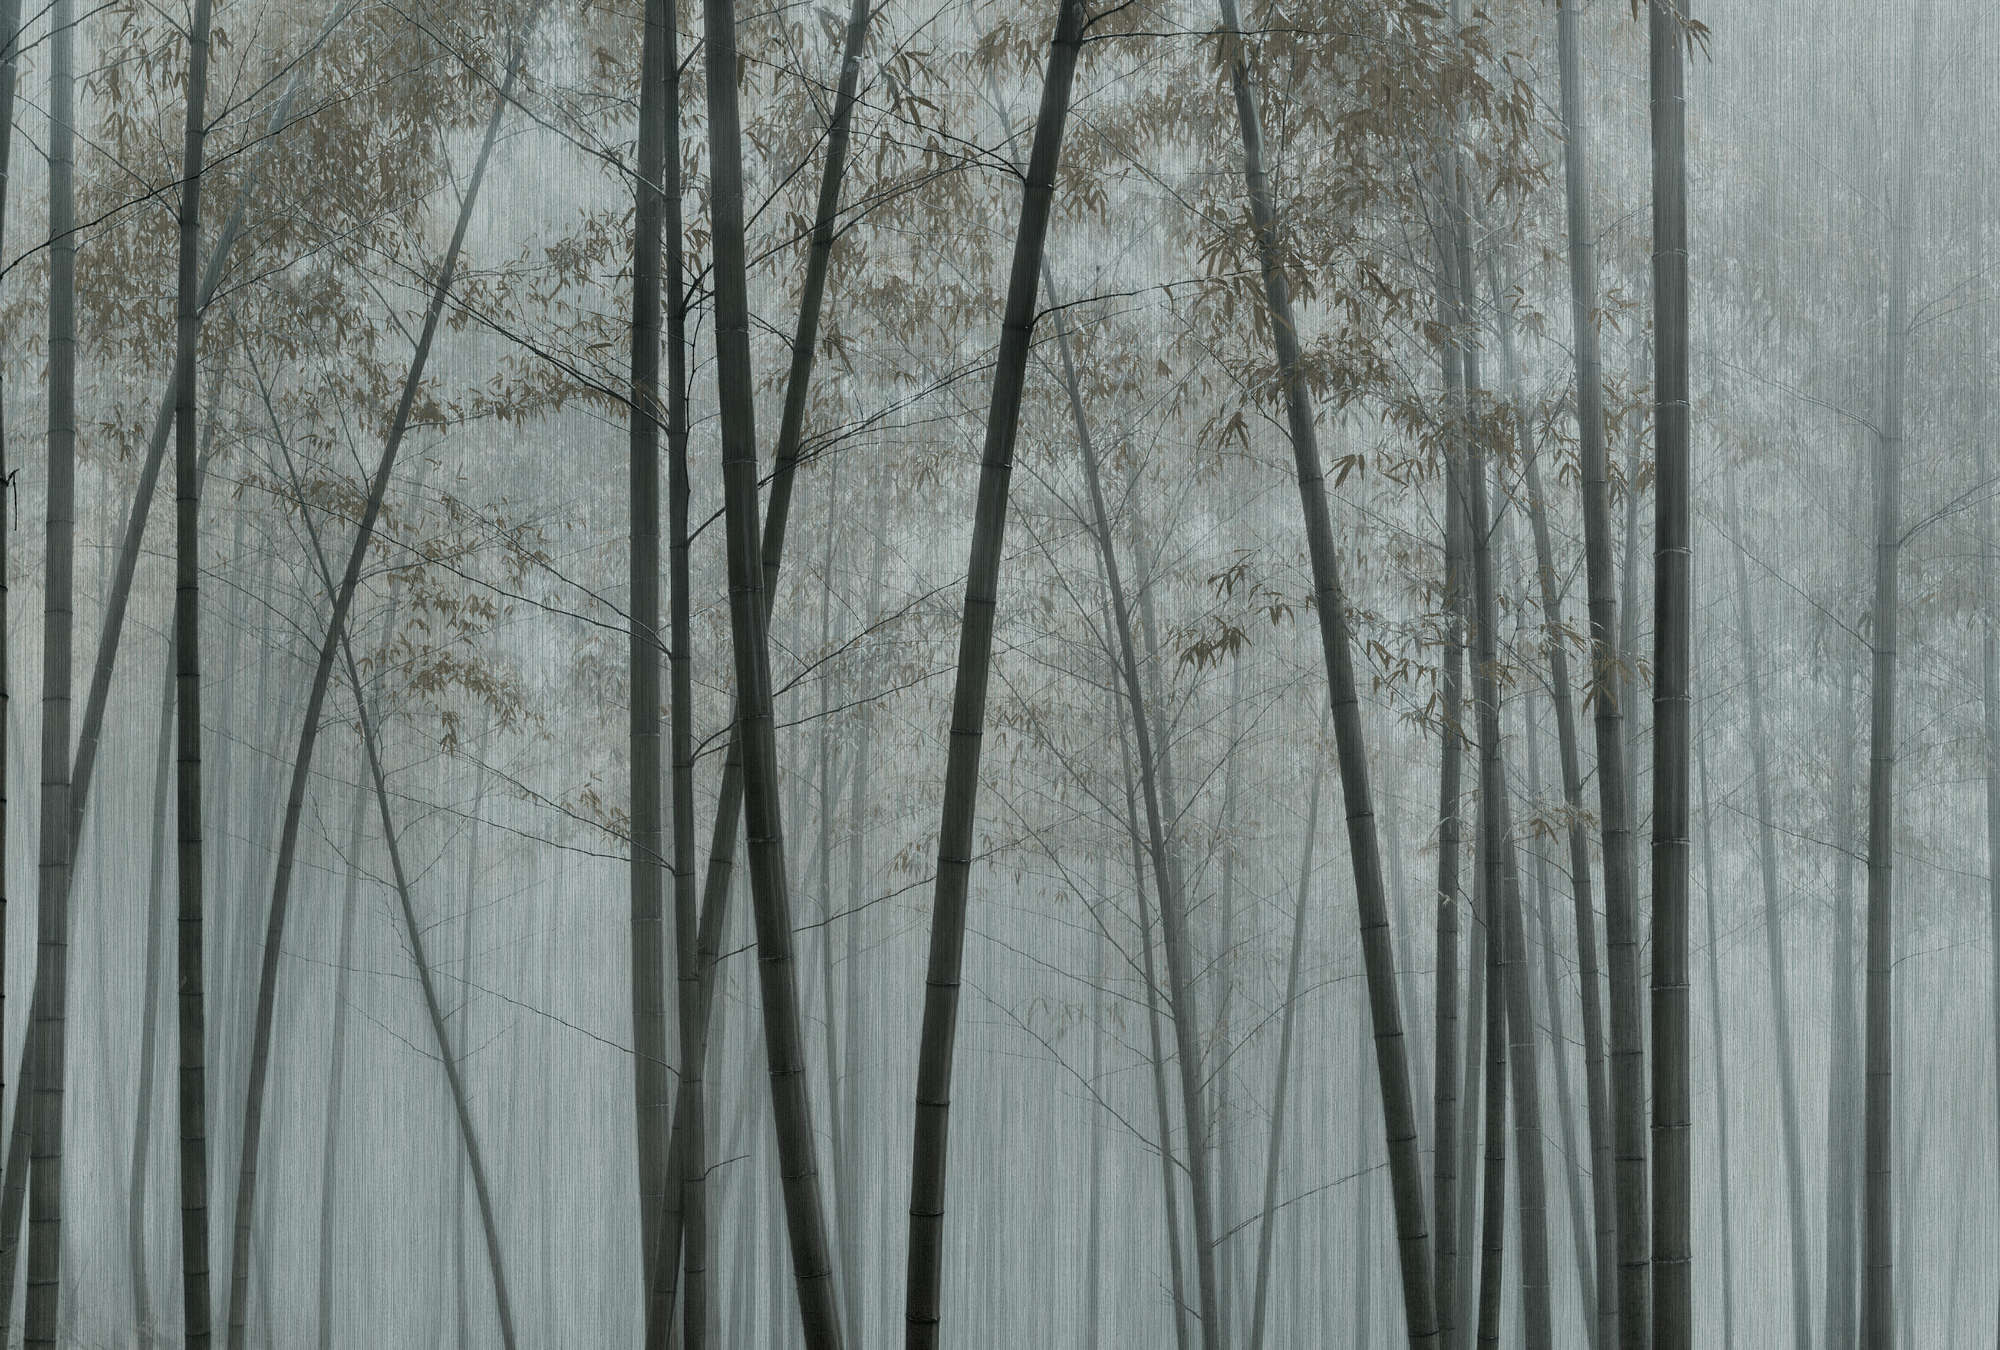             In the Bamboo 1 – Bambus Fototapete Bambus-Wald im Nebel
        